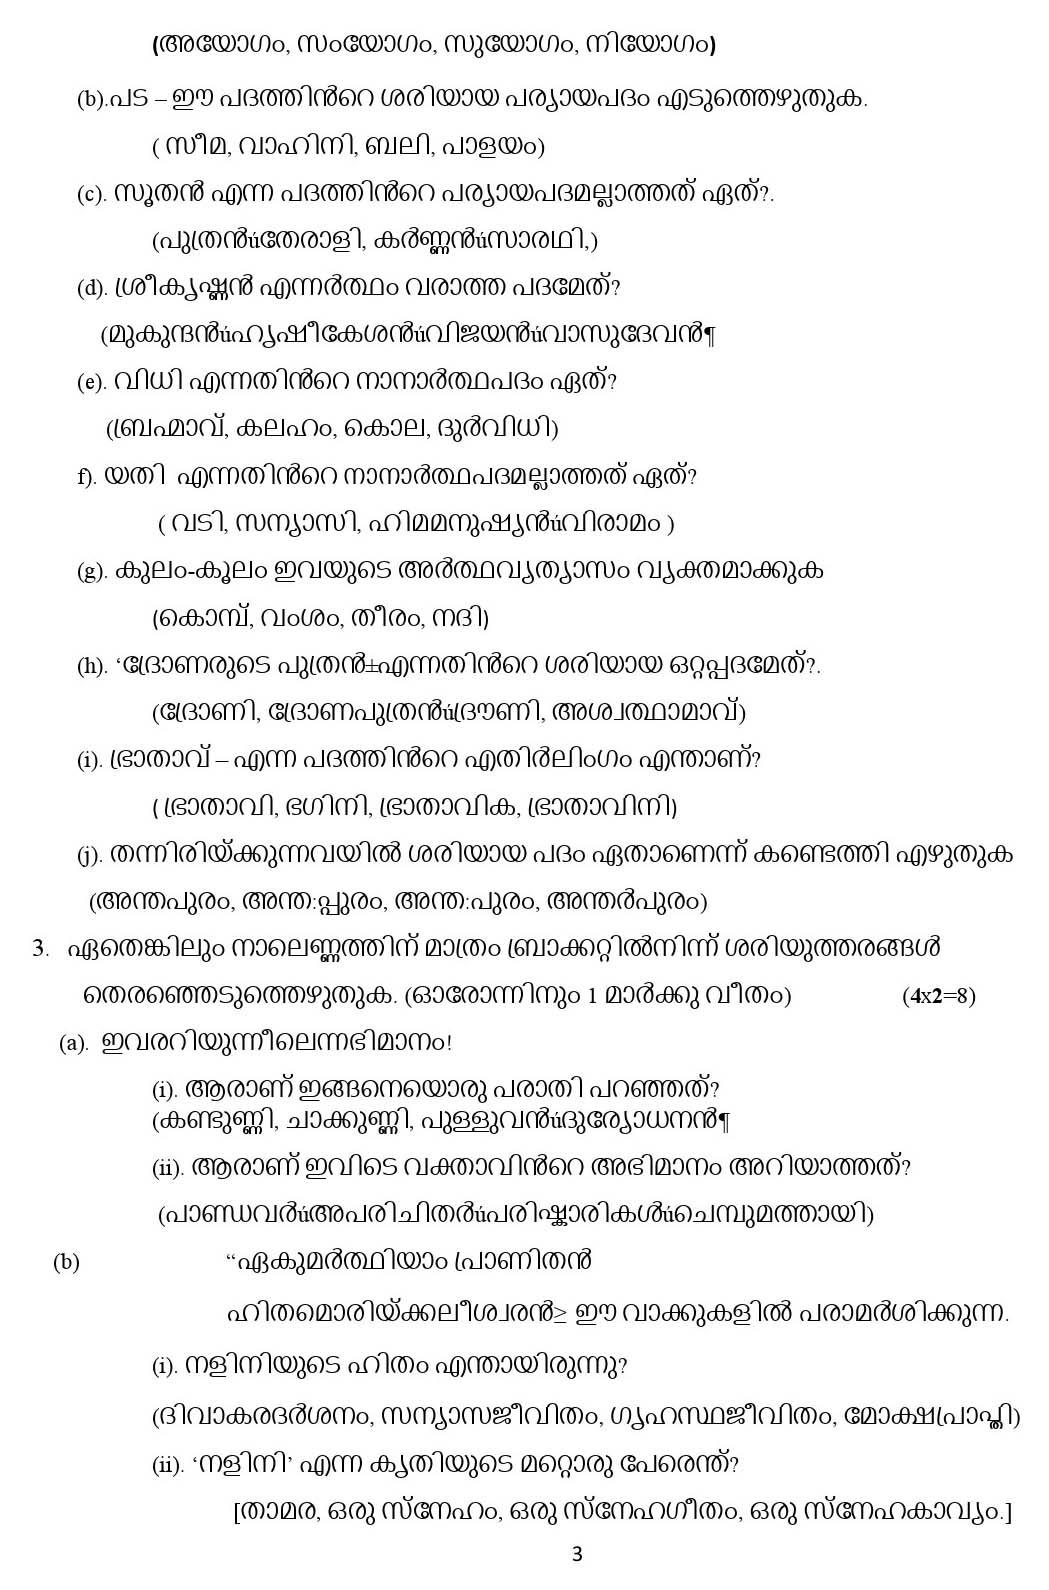 Malayalam CBSE Class X Sample Question Paper 2020 21 - Image 3